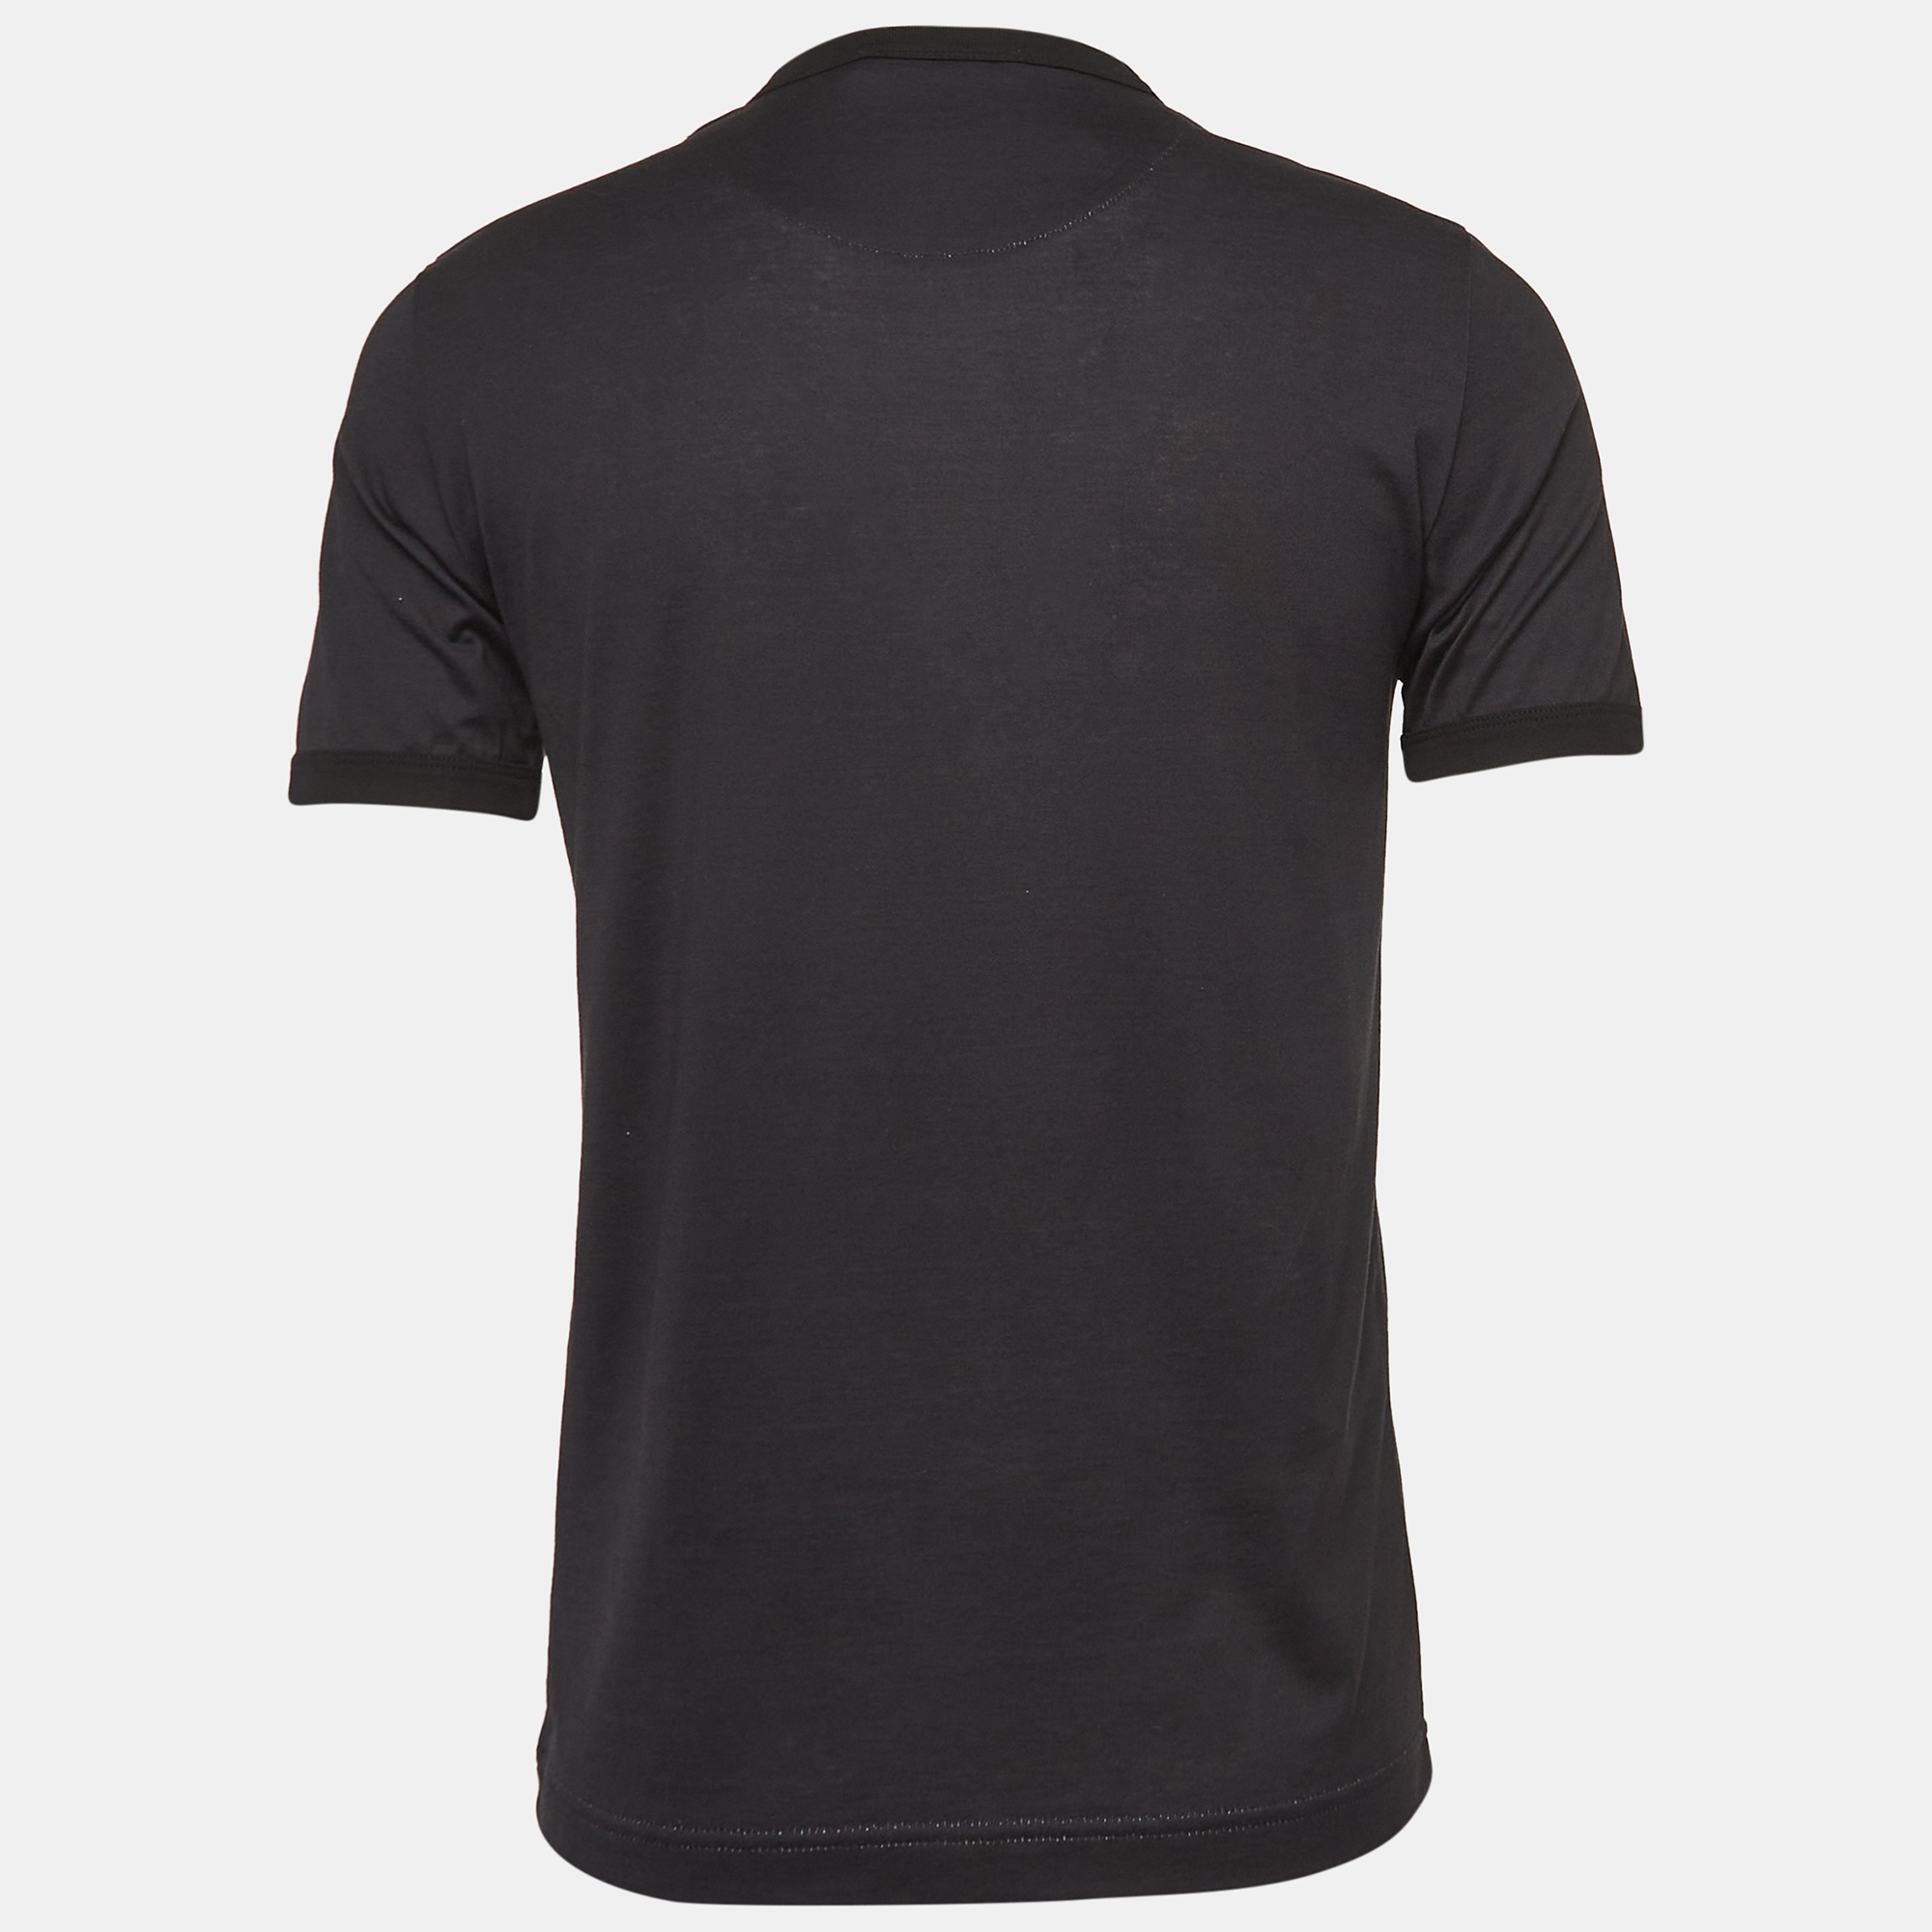 

Dolce & Gabbana Black 1 Printed Cotton Knit Crew Neck T-Shirt